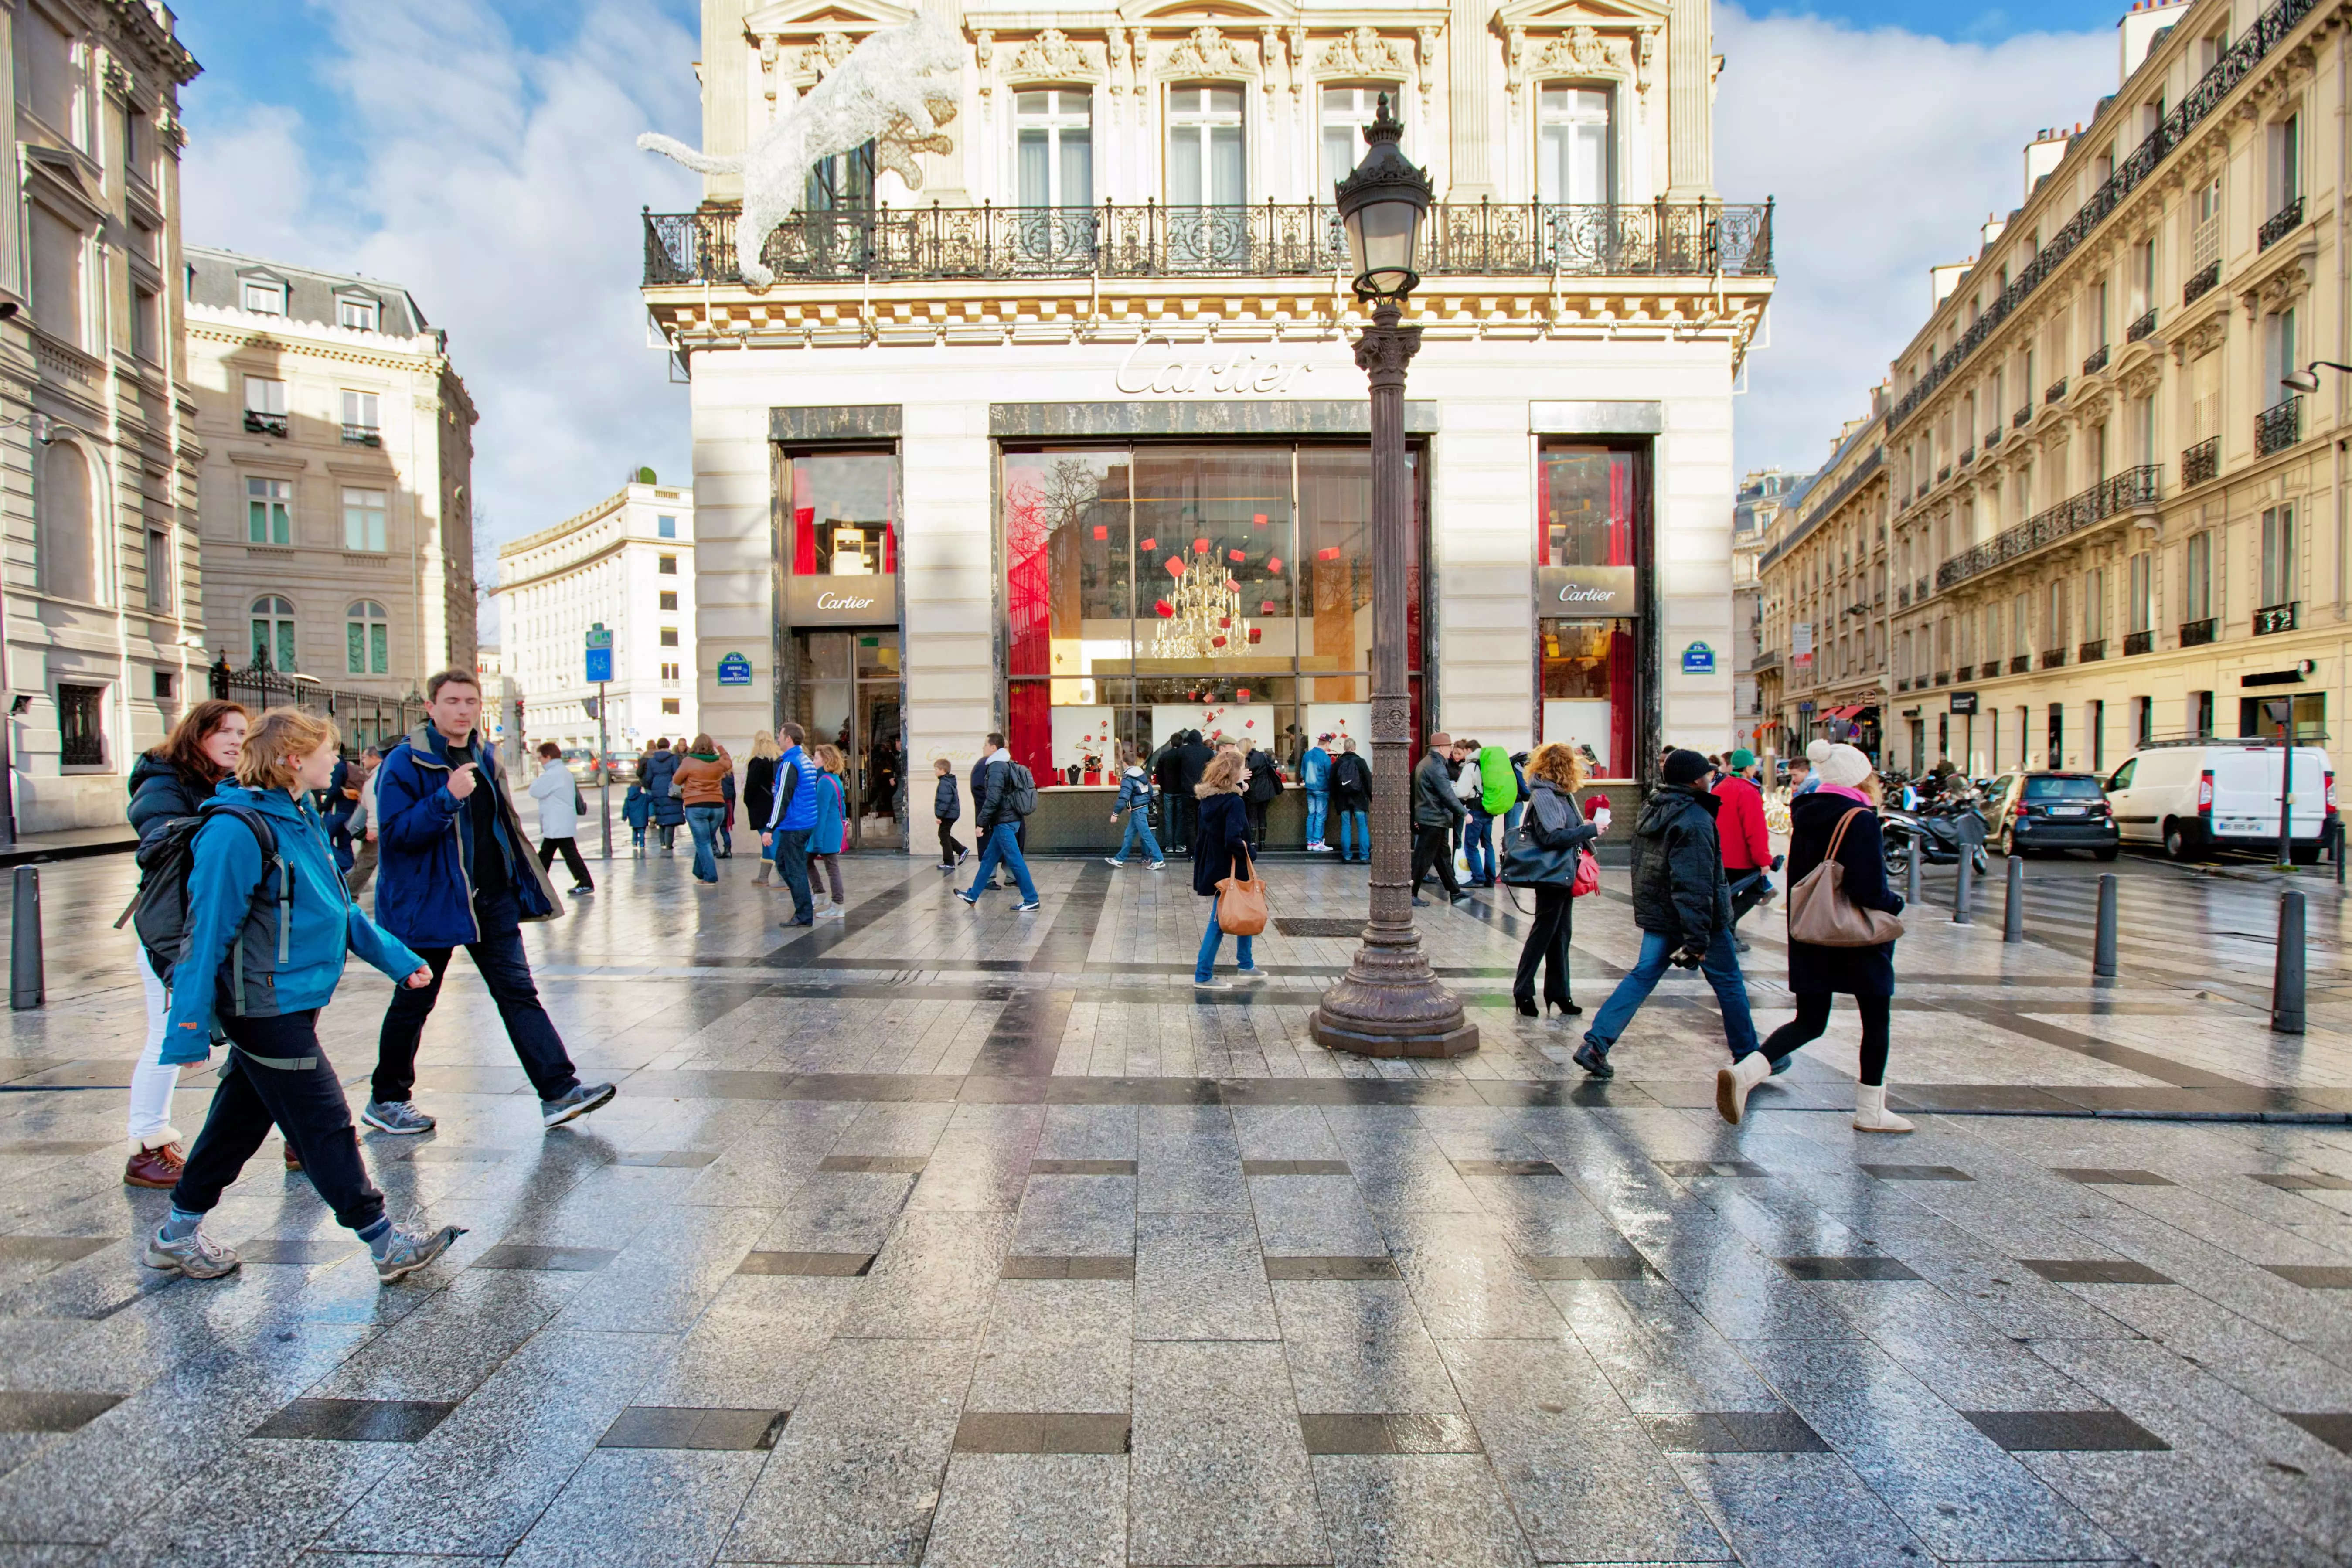 Travel Trends: American tourists splurge in Paris boutiques as